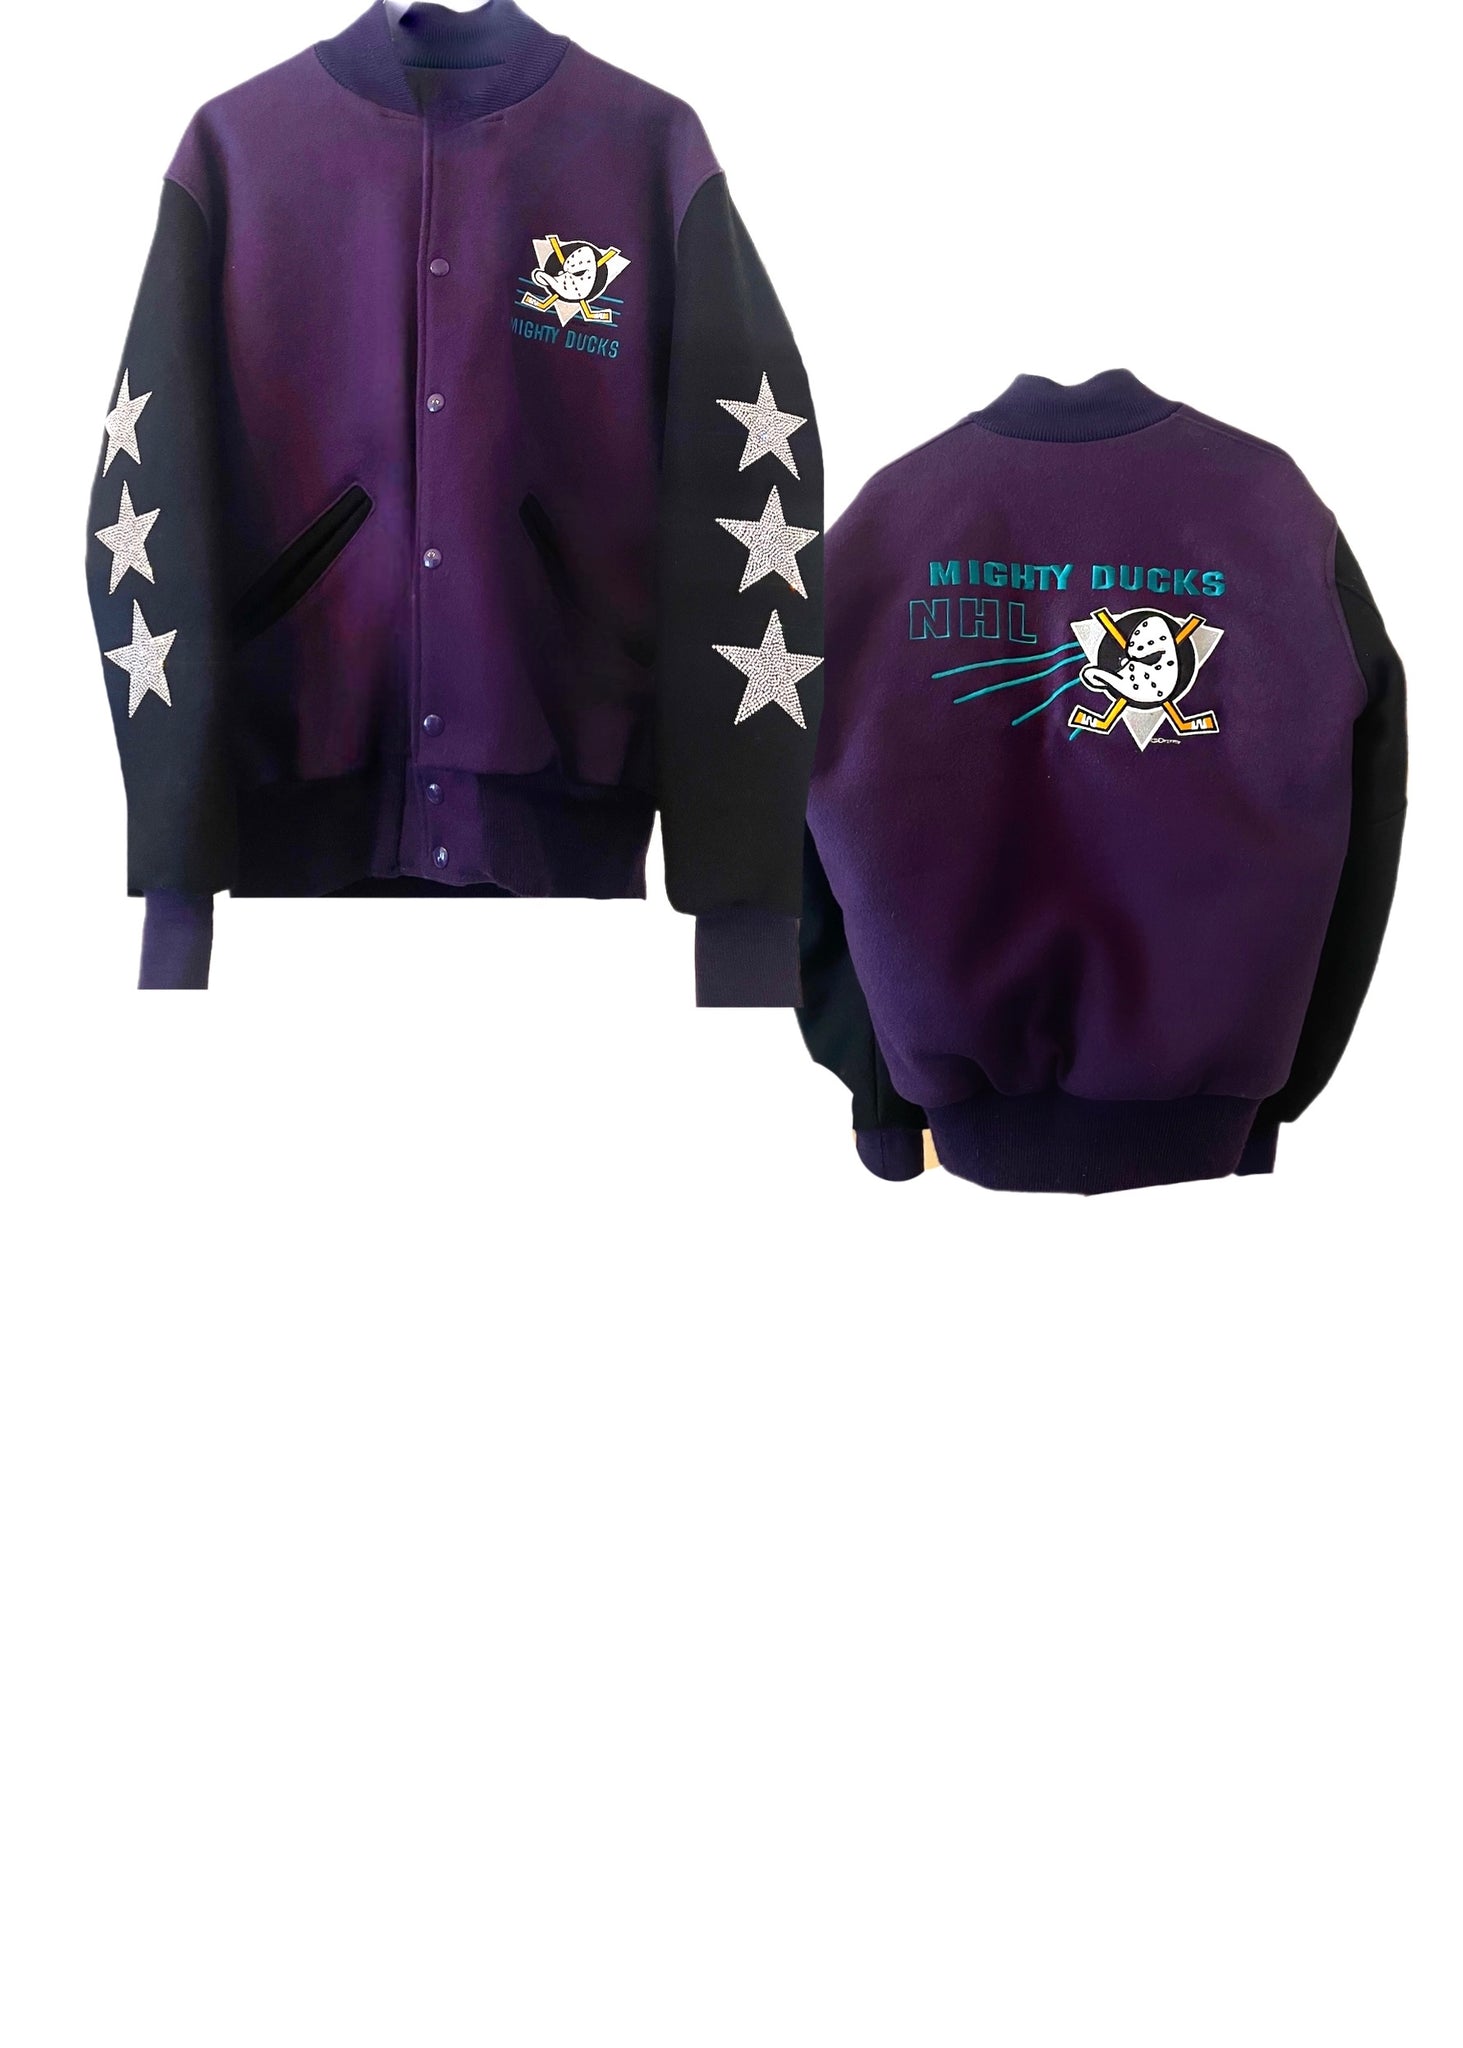 Anaheim Ducks, NHL “Rare Find” One of a KIND Vintage “Mighty Ducks”  Sweatshirt with Three Crystal Star Design